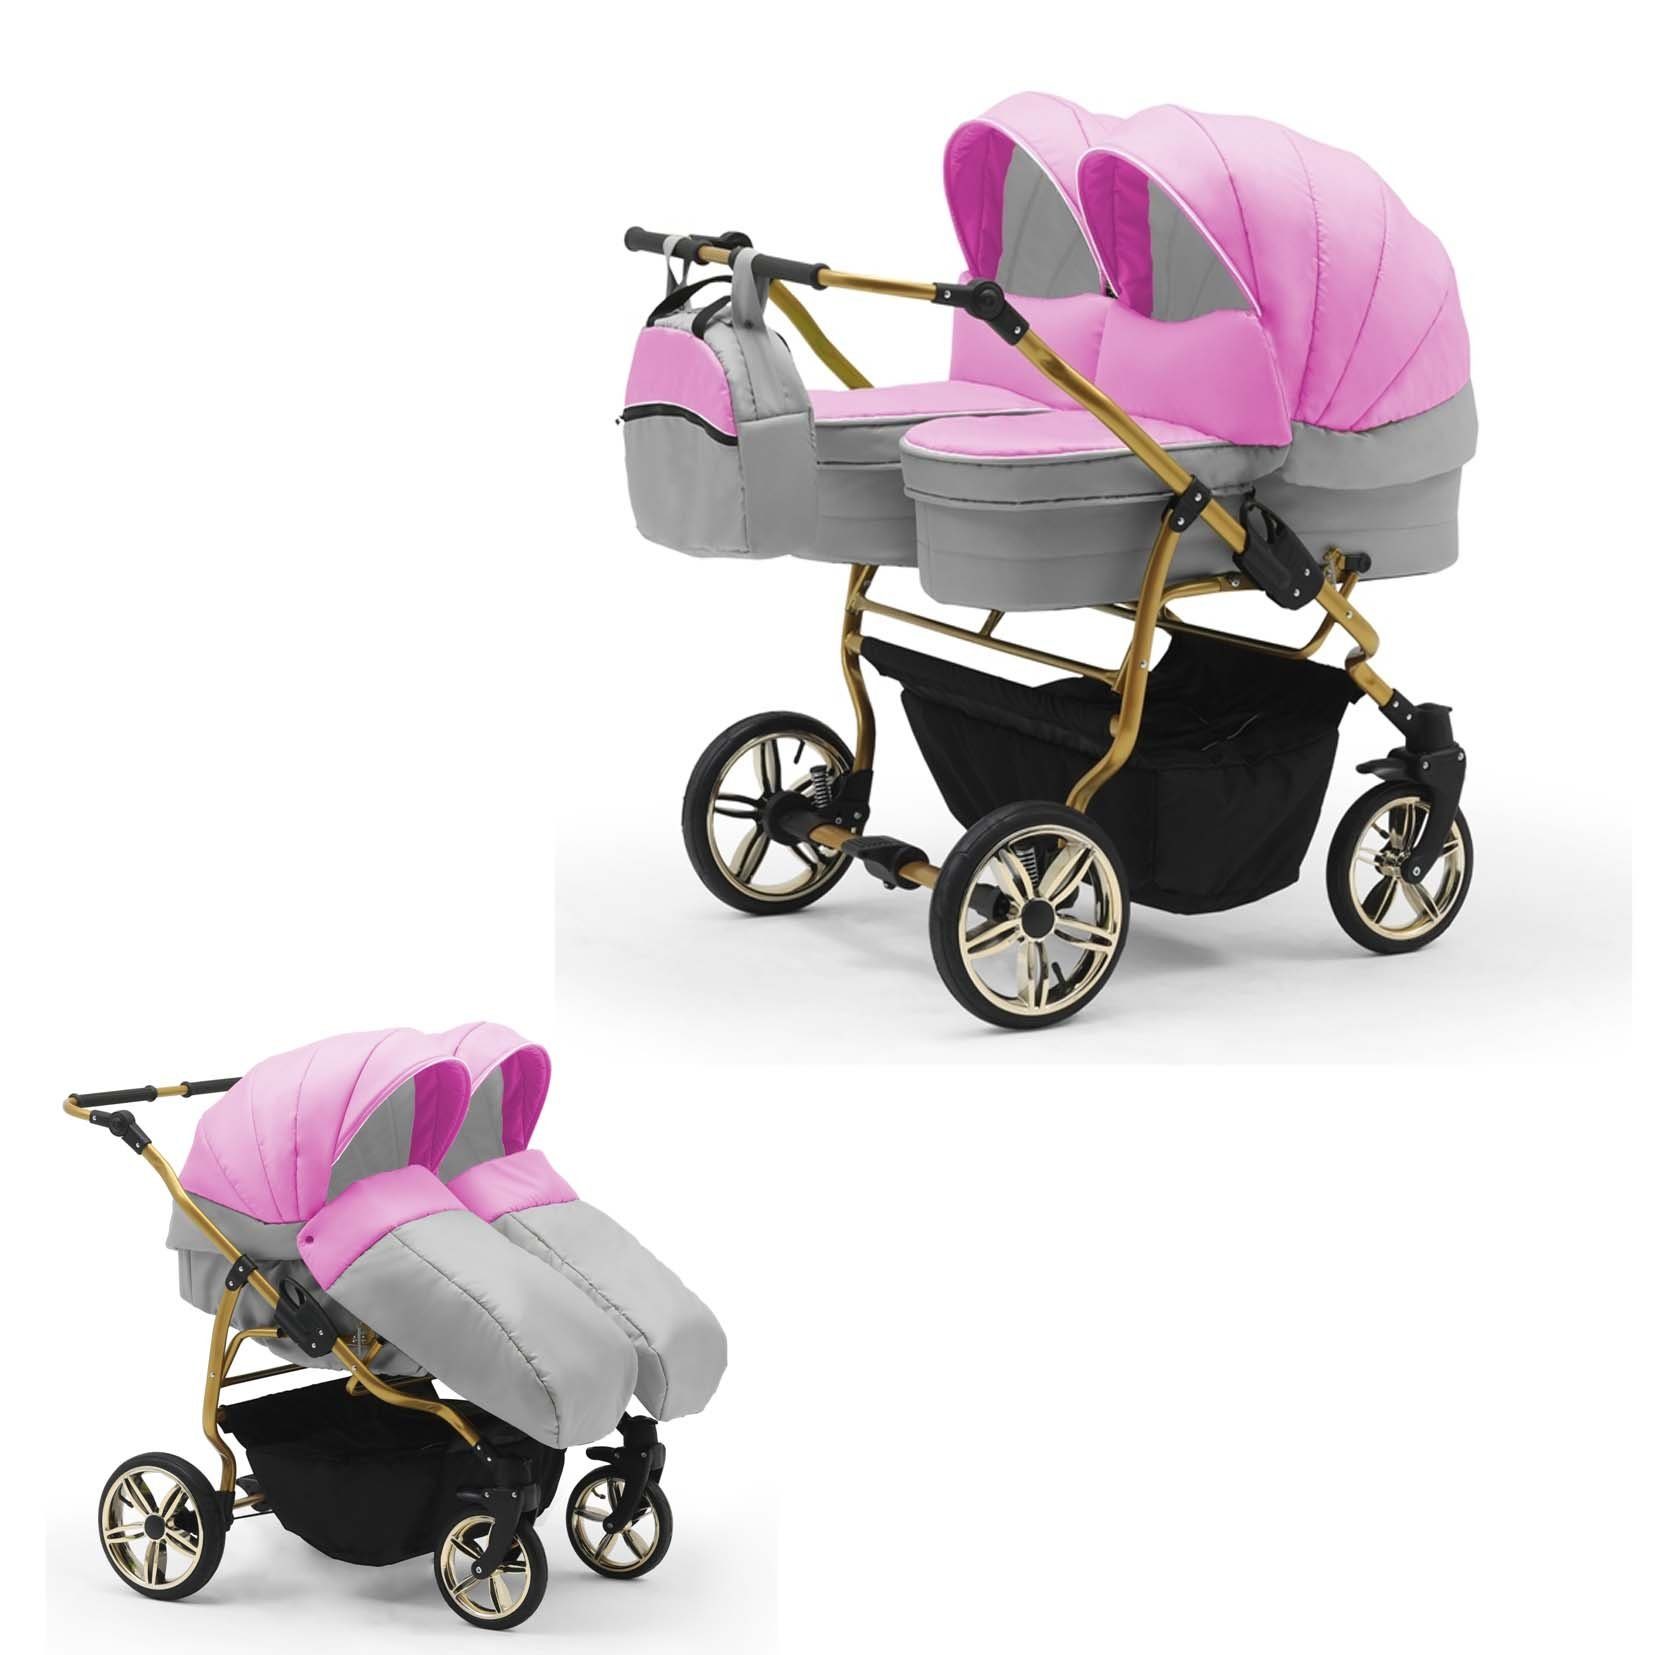 babies-on-wheels Zwillingswagen - Teile 2 in Zwillingskinderwagen Duet 33 1 Rosa-Grau - 10 Lux Farben in